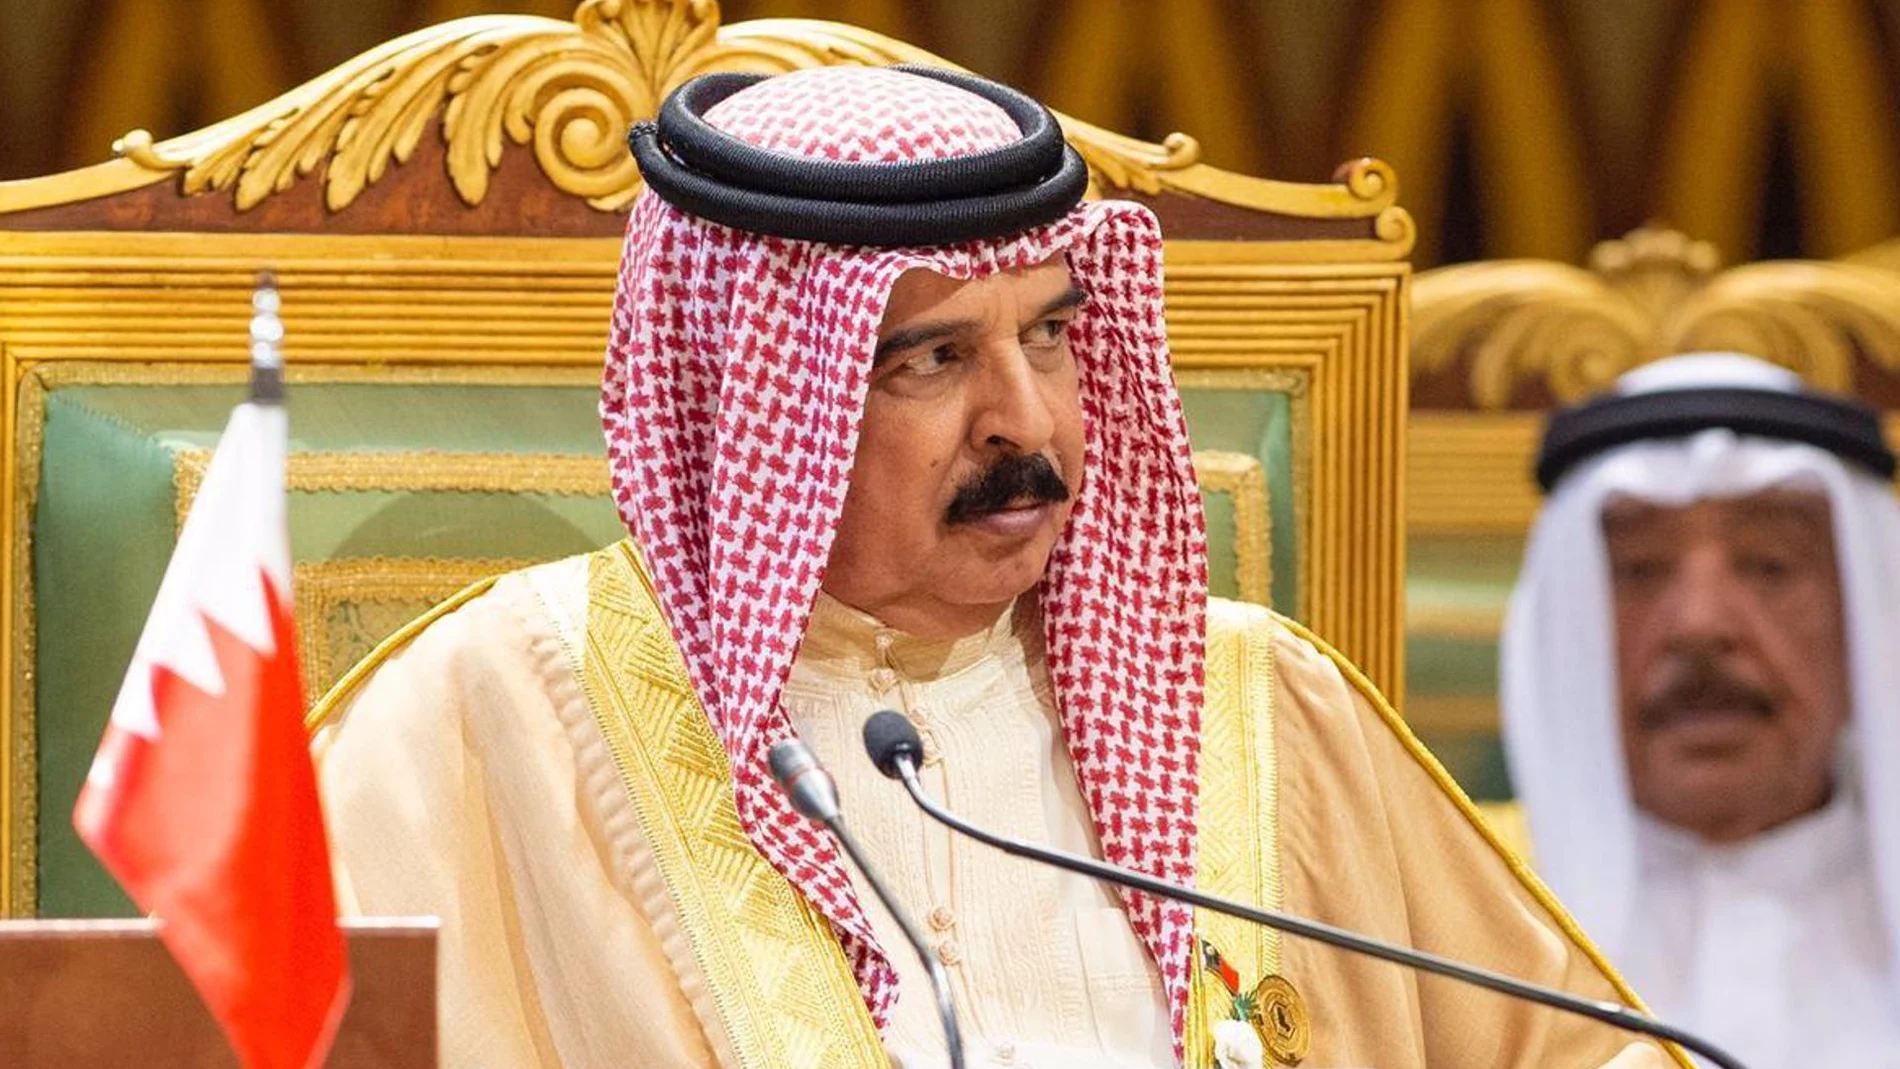 Bahréin.- El rey de Bahréin concede un perdón a cerca de 1.600 presos, incluidos condenados por participar en protestas